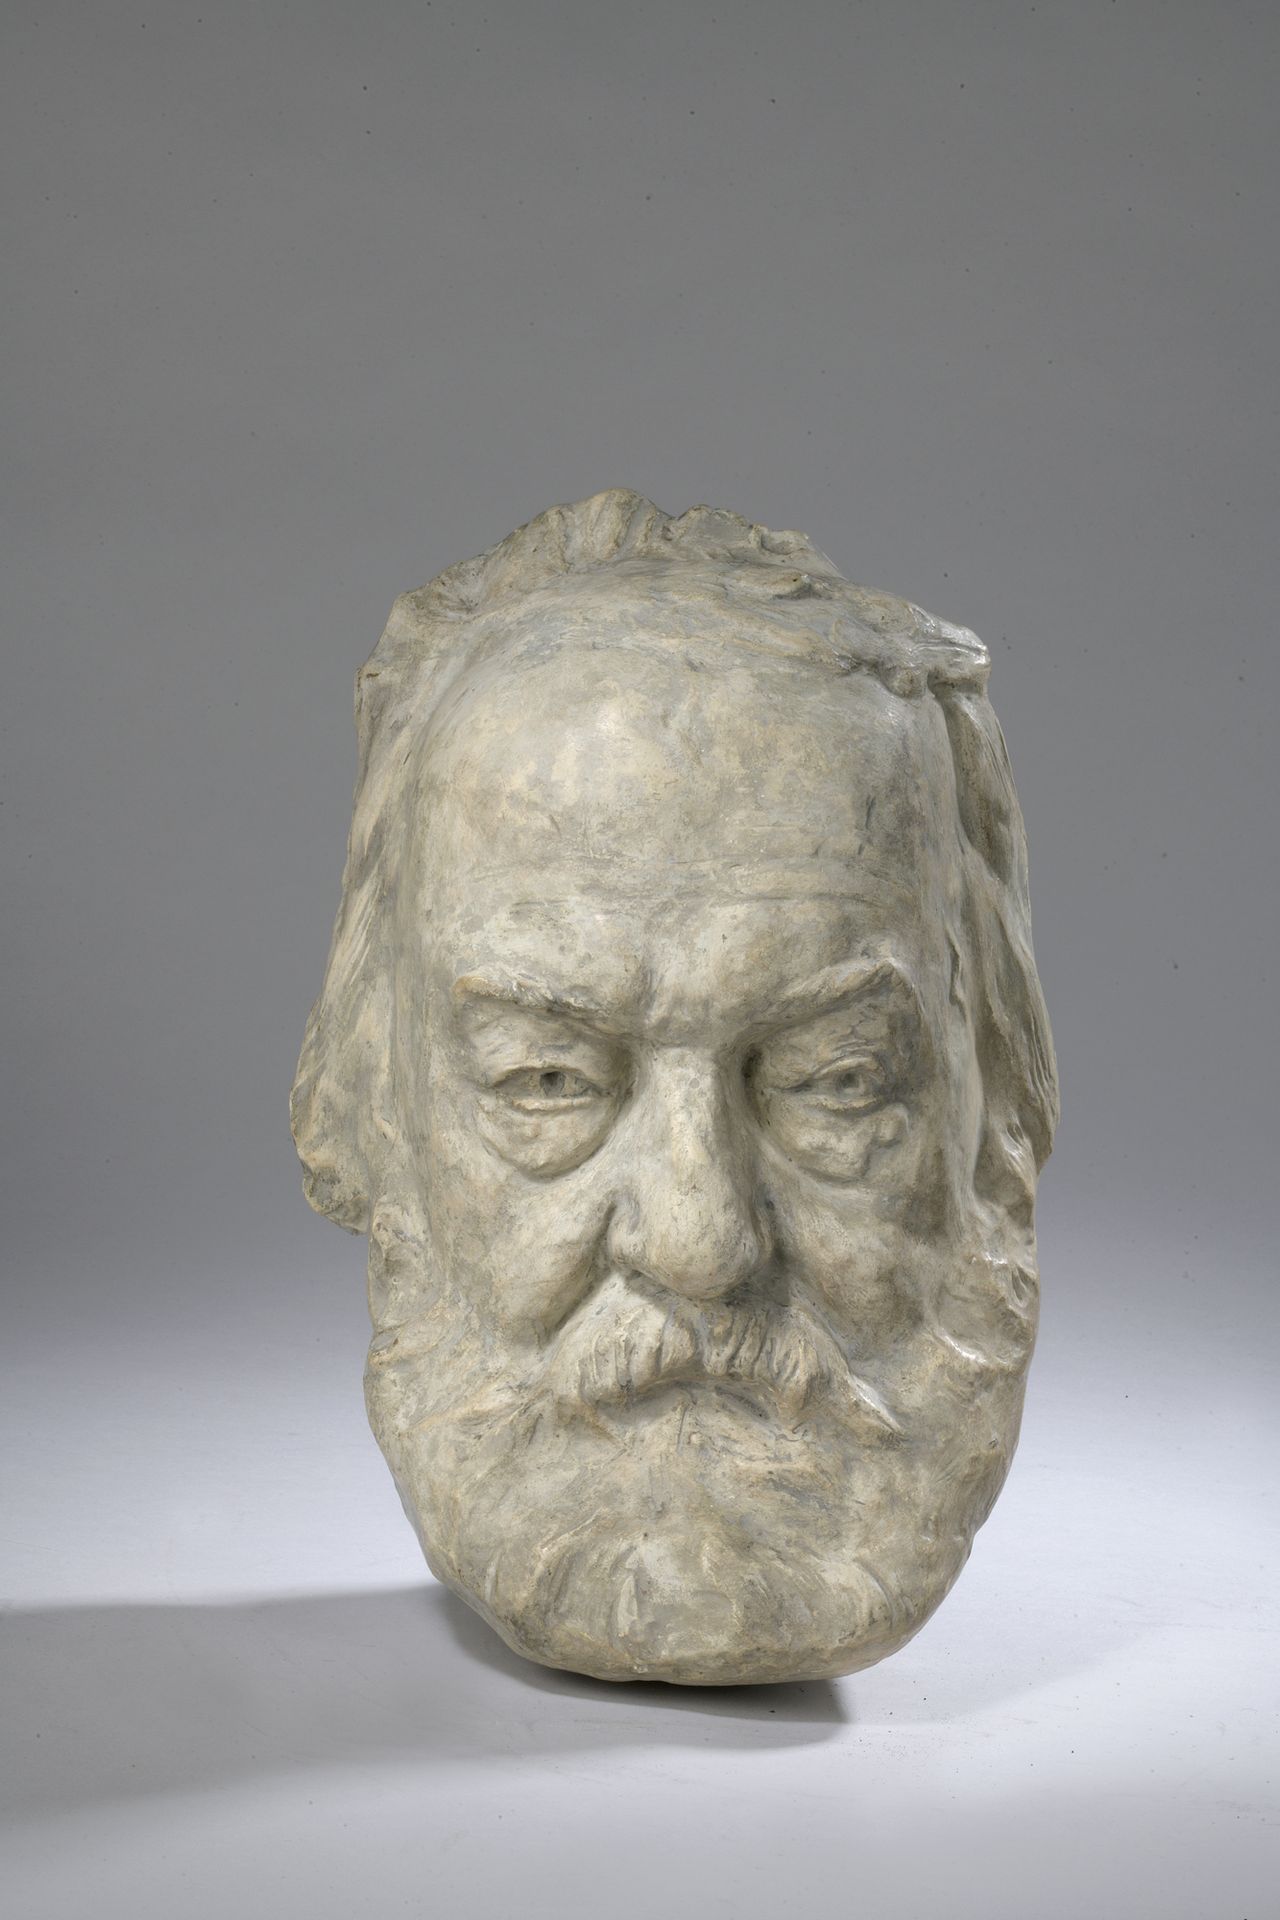 Null 让-乔治-阿夏尔 (1871-1934)

维克多-雨果的面具

石膏的证明。

签名：G-Achard。

H.30厘米